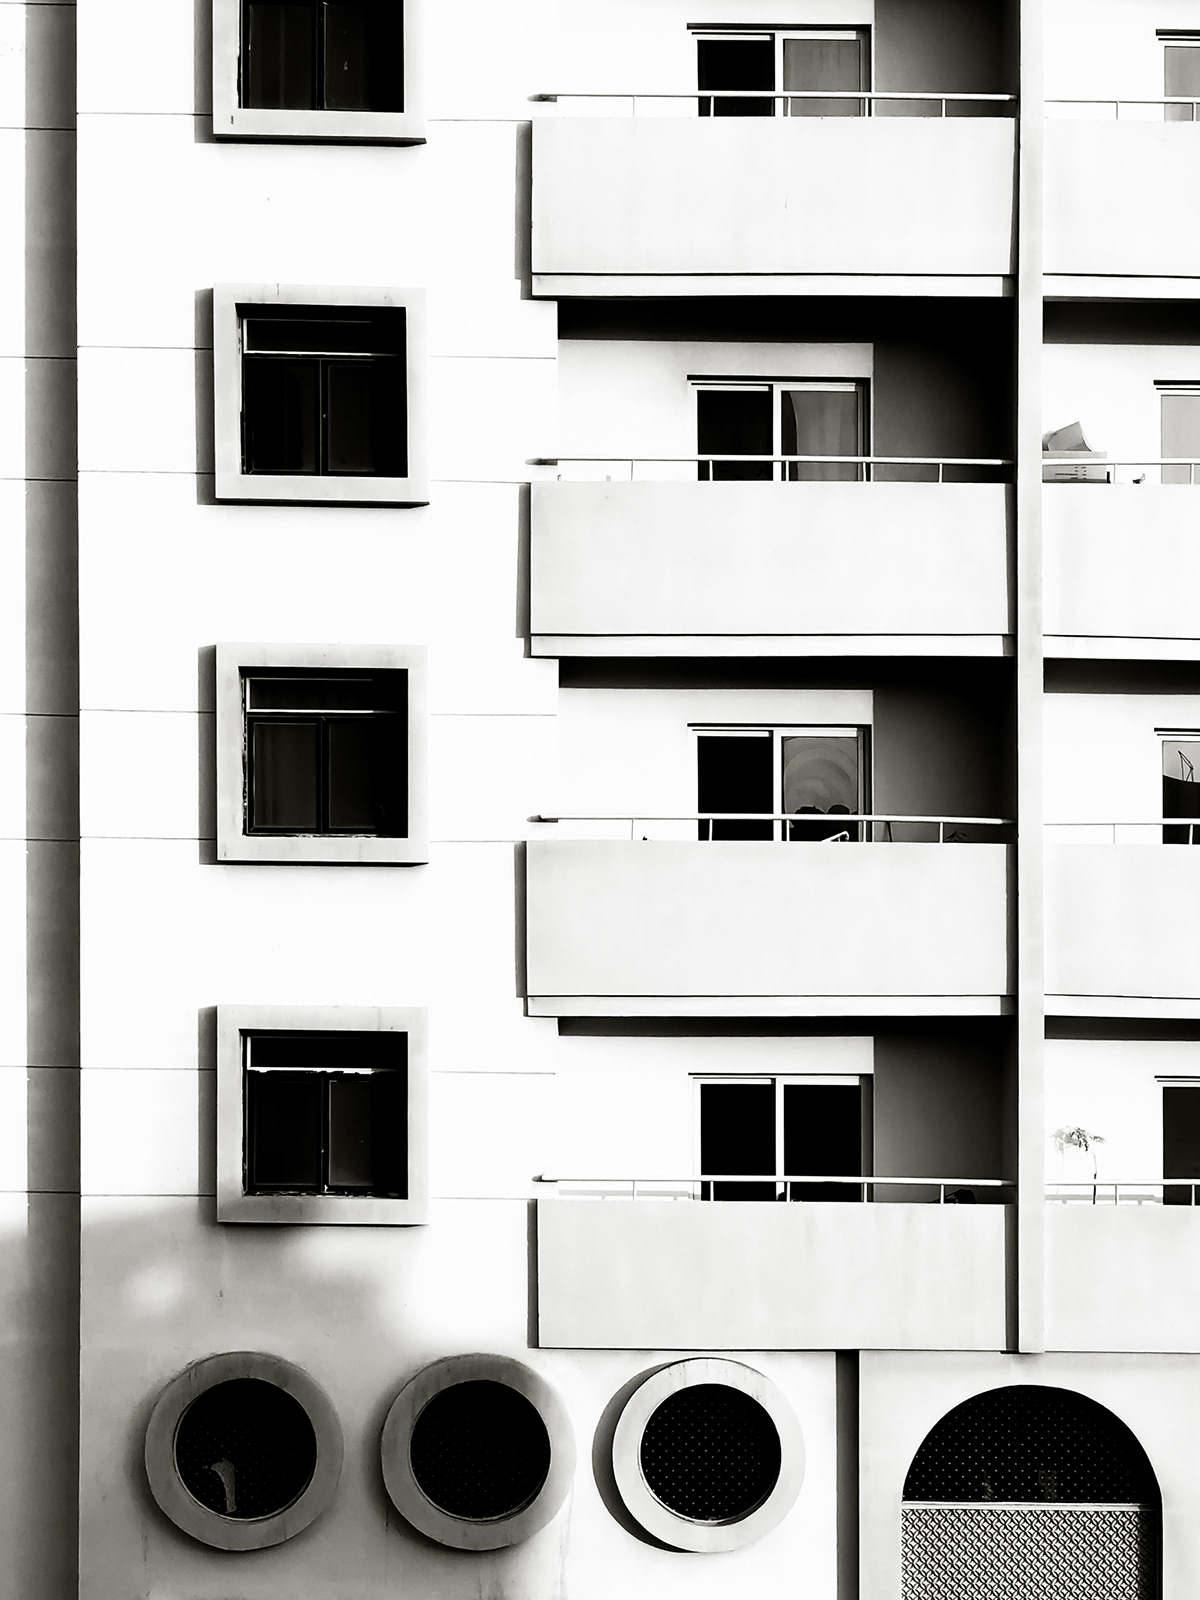 photograph minimal photography black and white street photograph architecture minimal